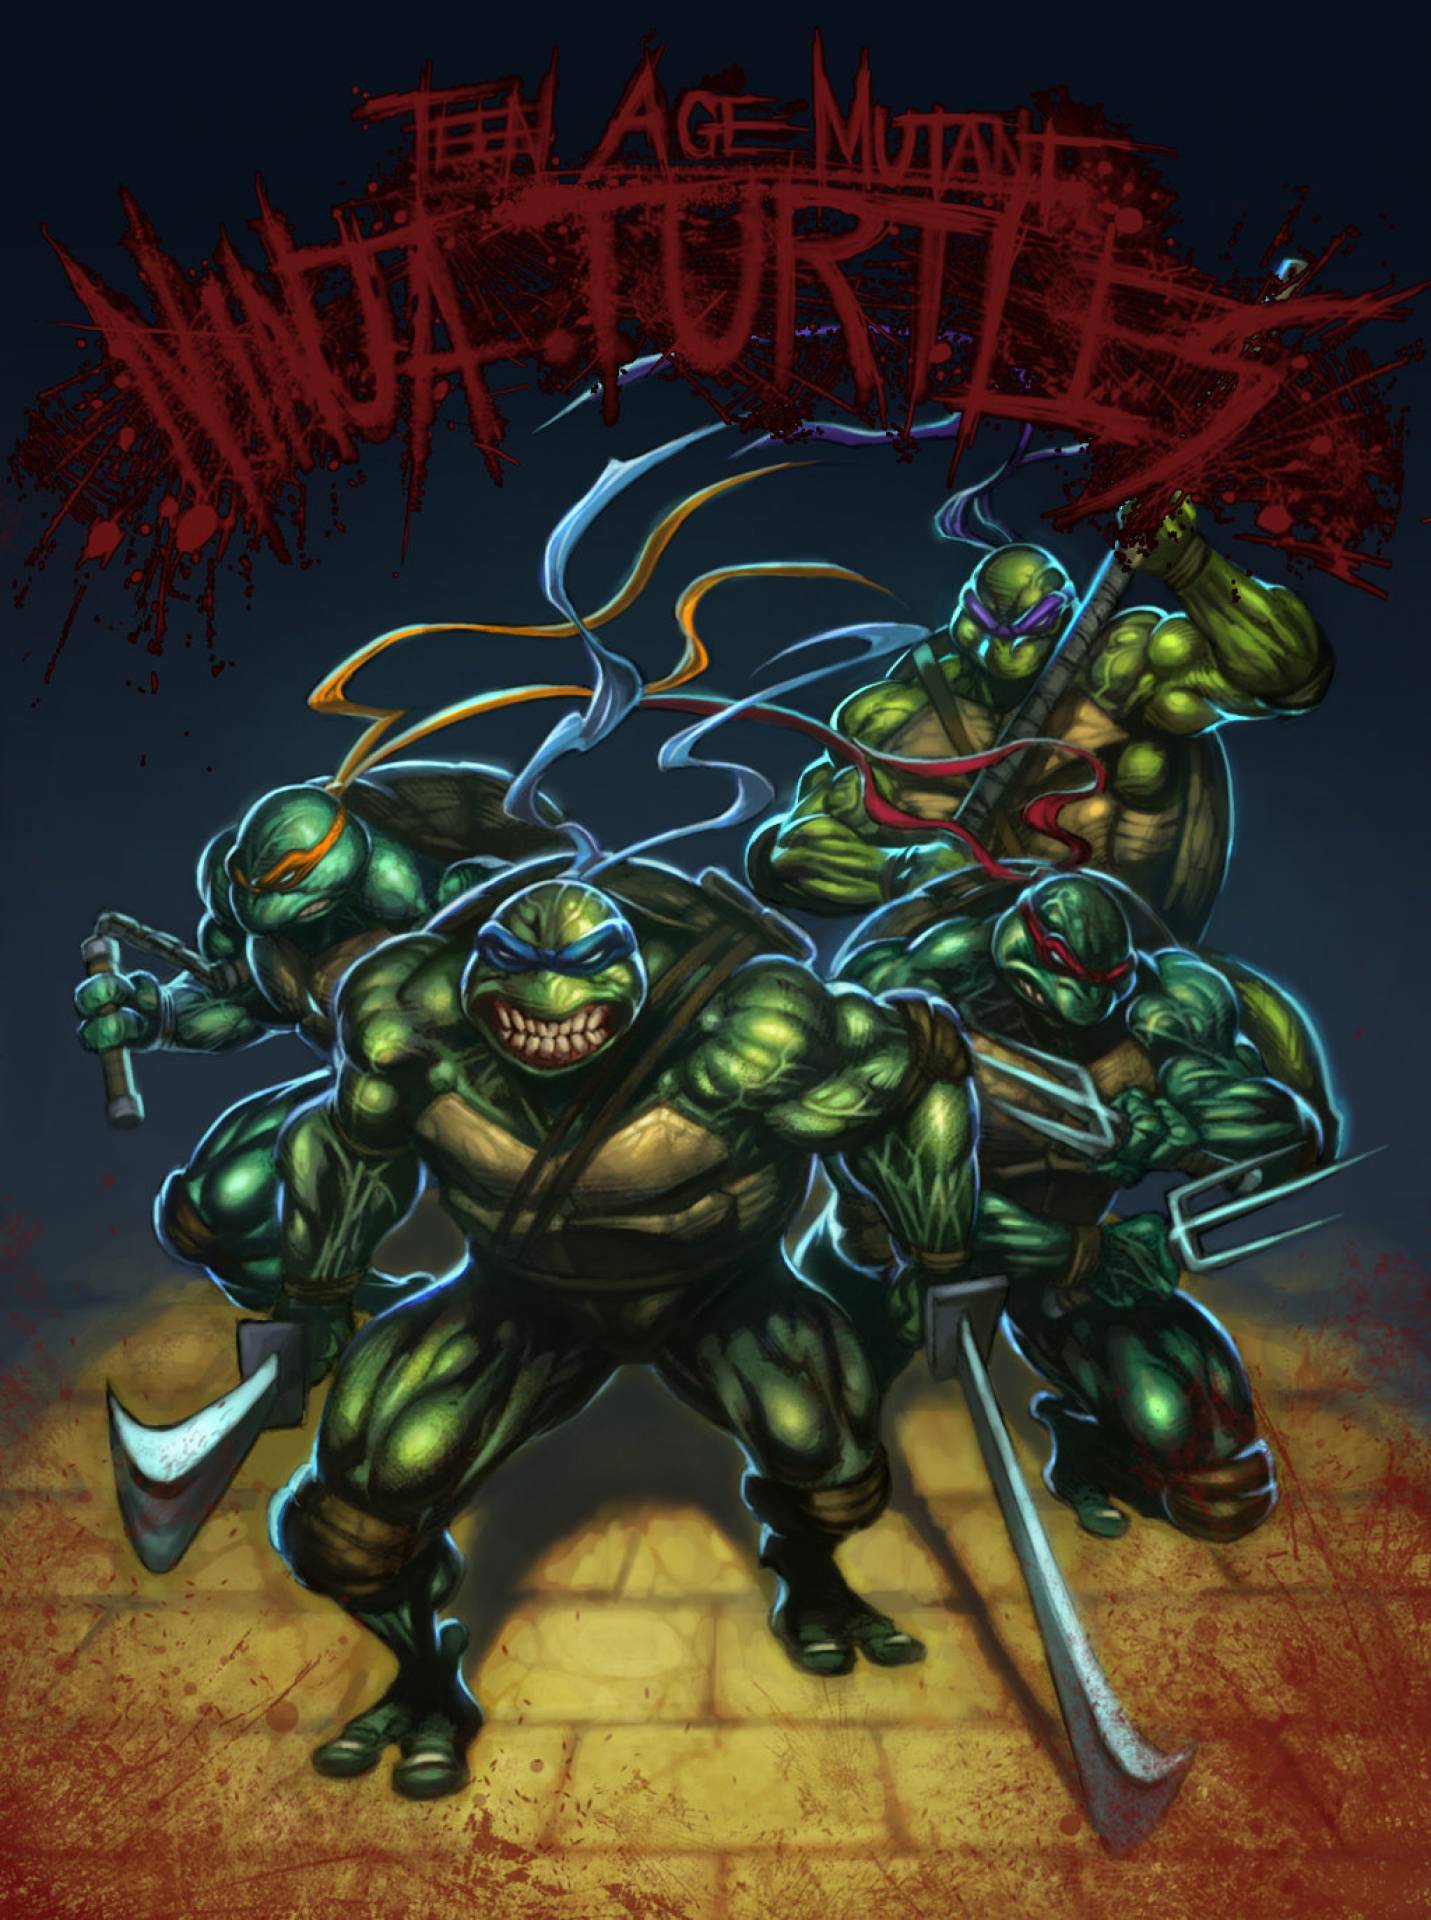 Teenage Mutant Ninja Turtles (Mirage Studios) - Wikipedia